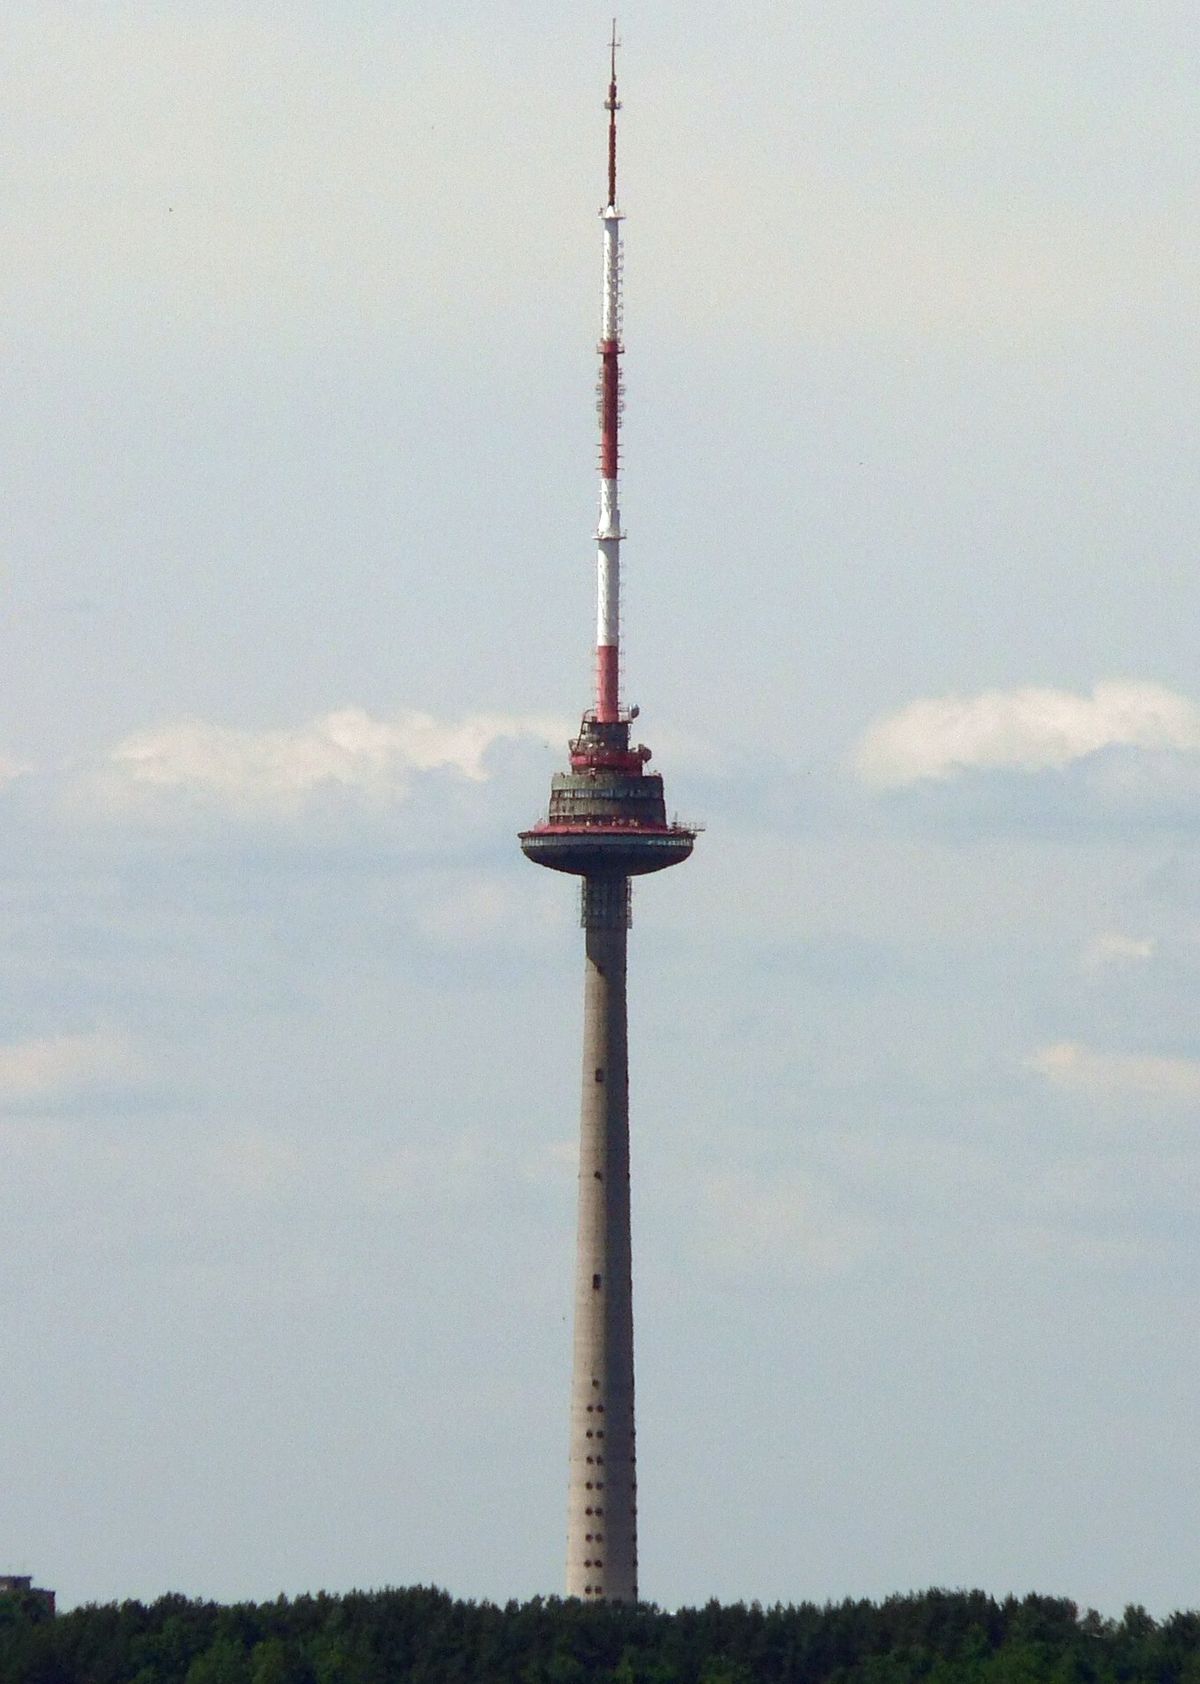 Vilnius TV Tower - Wikipedia